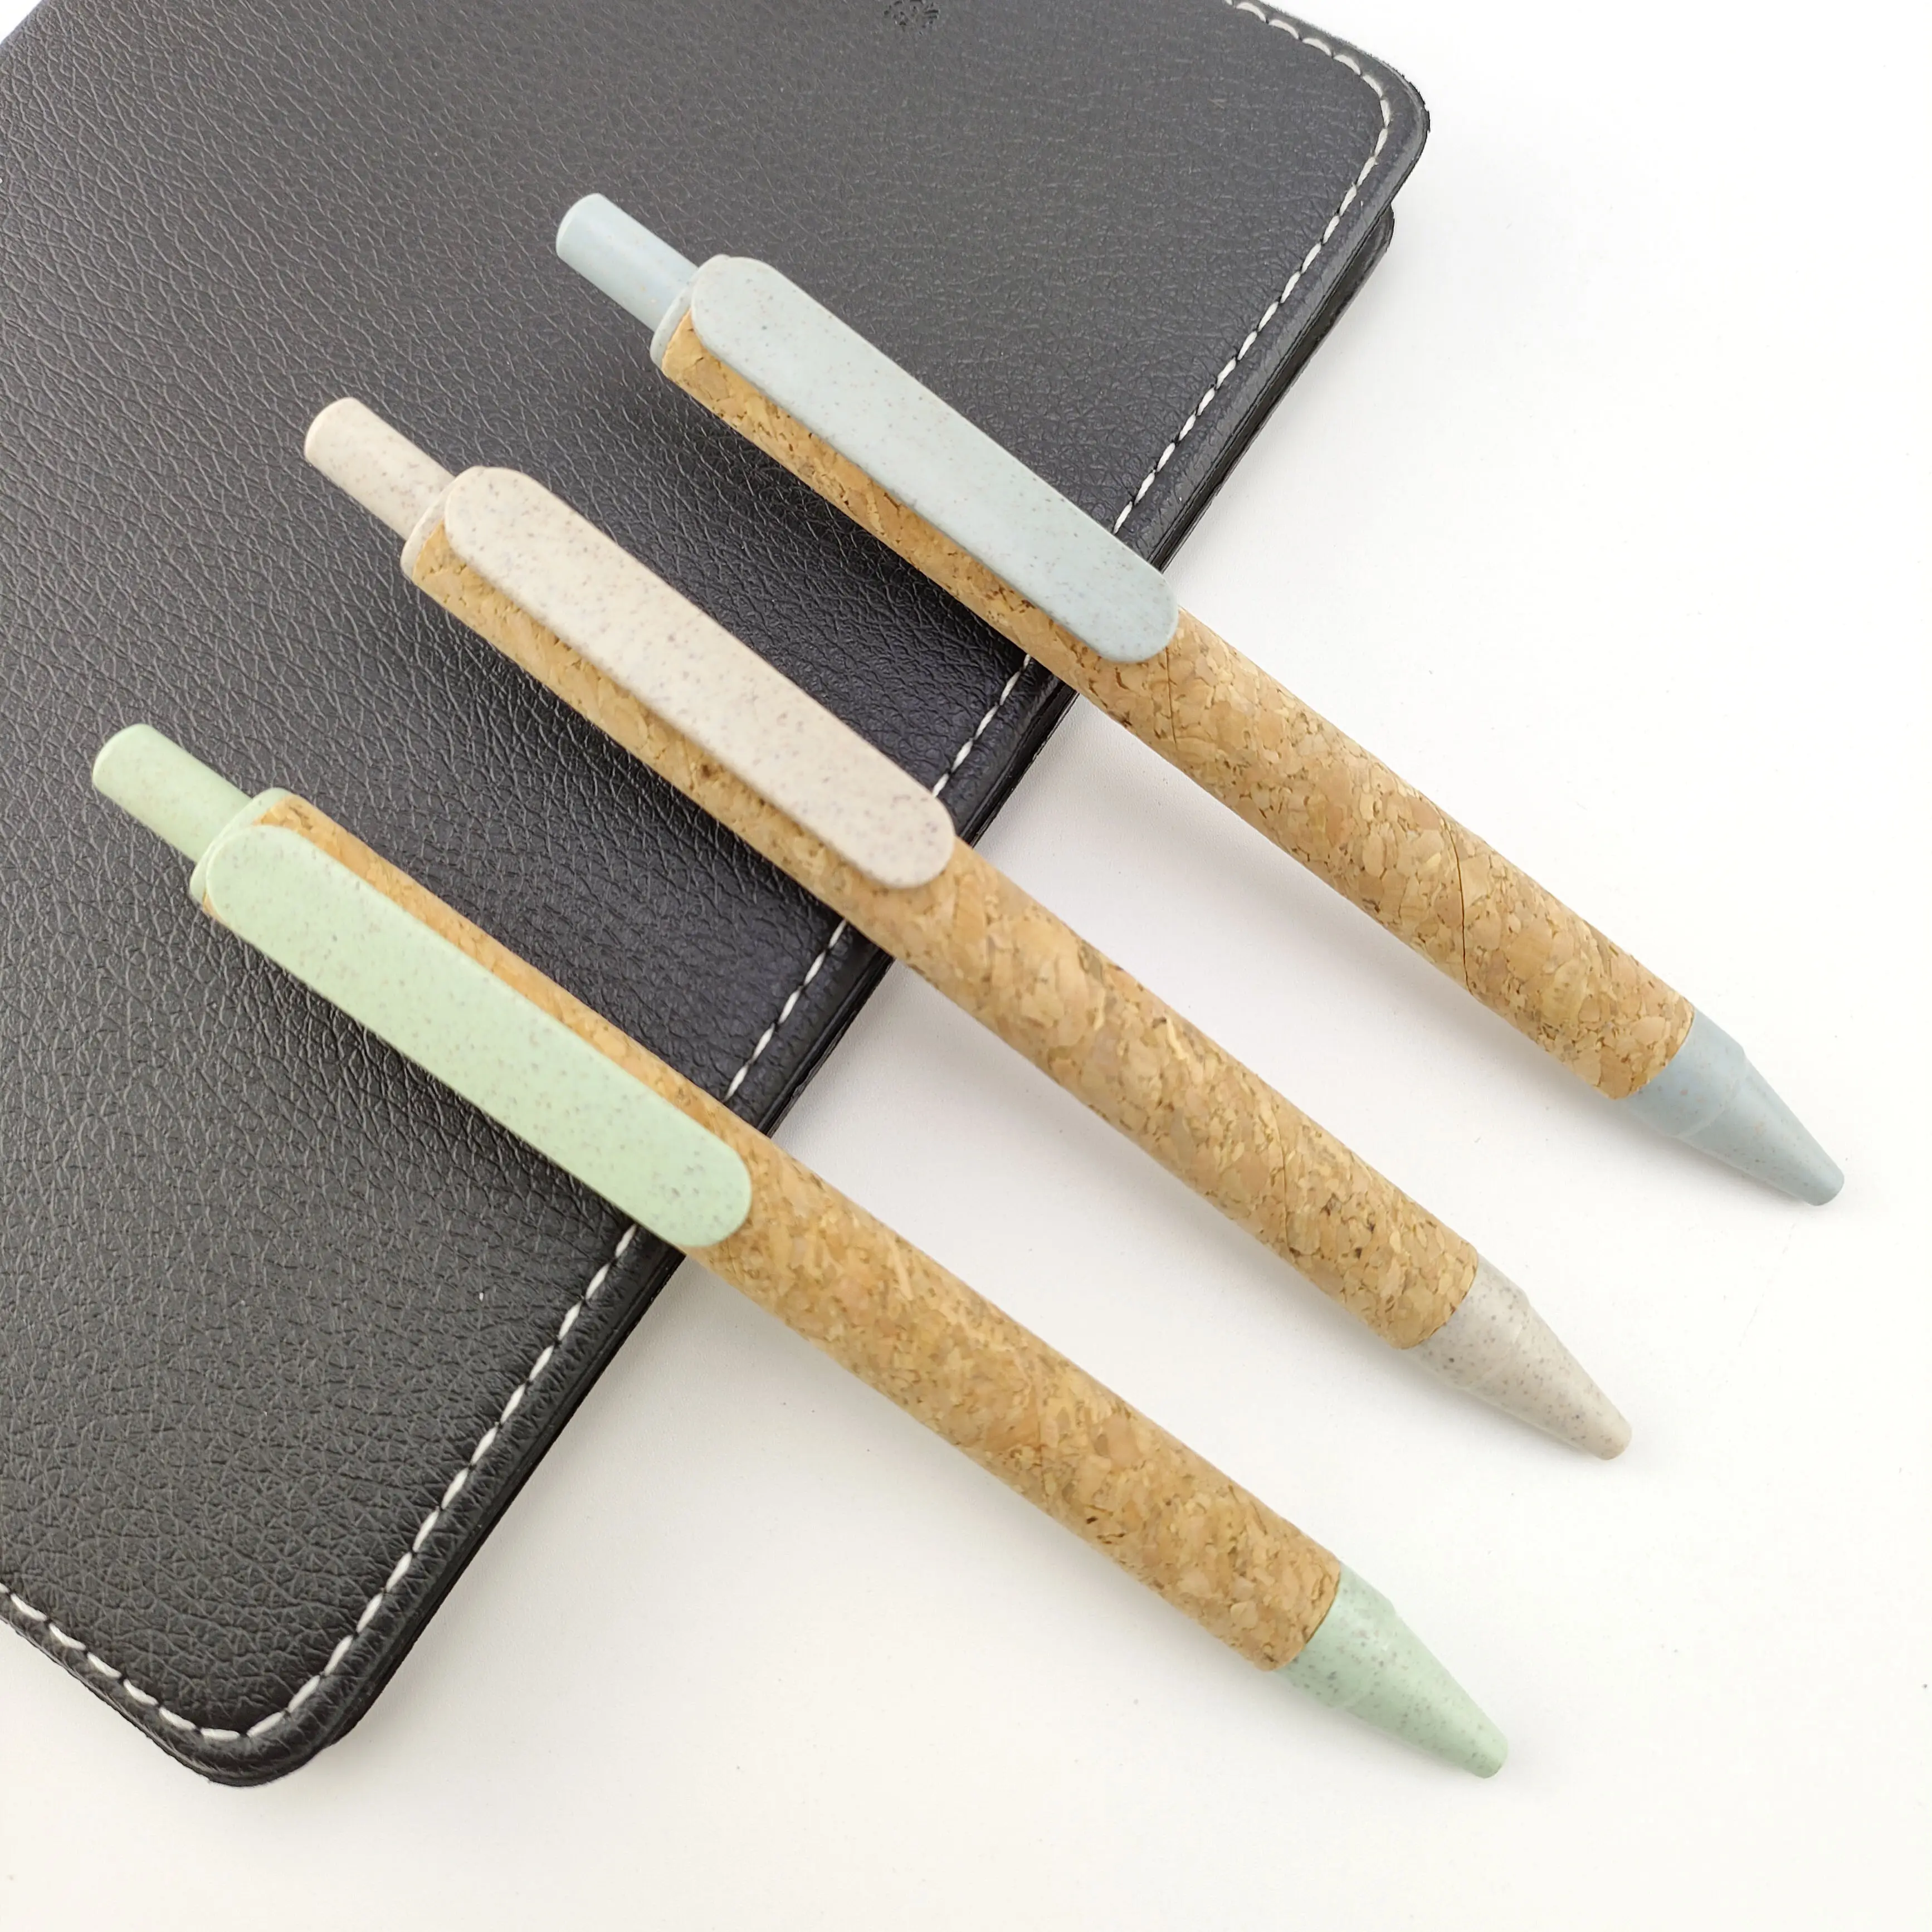 Manufacturers supply wheat straw ballpoint pen cork pen gift pen Custom ballpoint can be printed